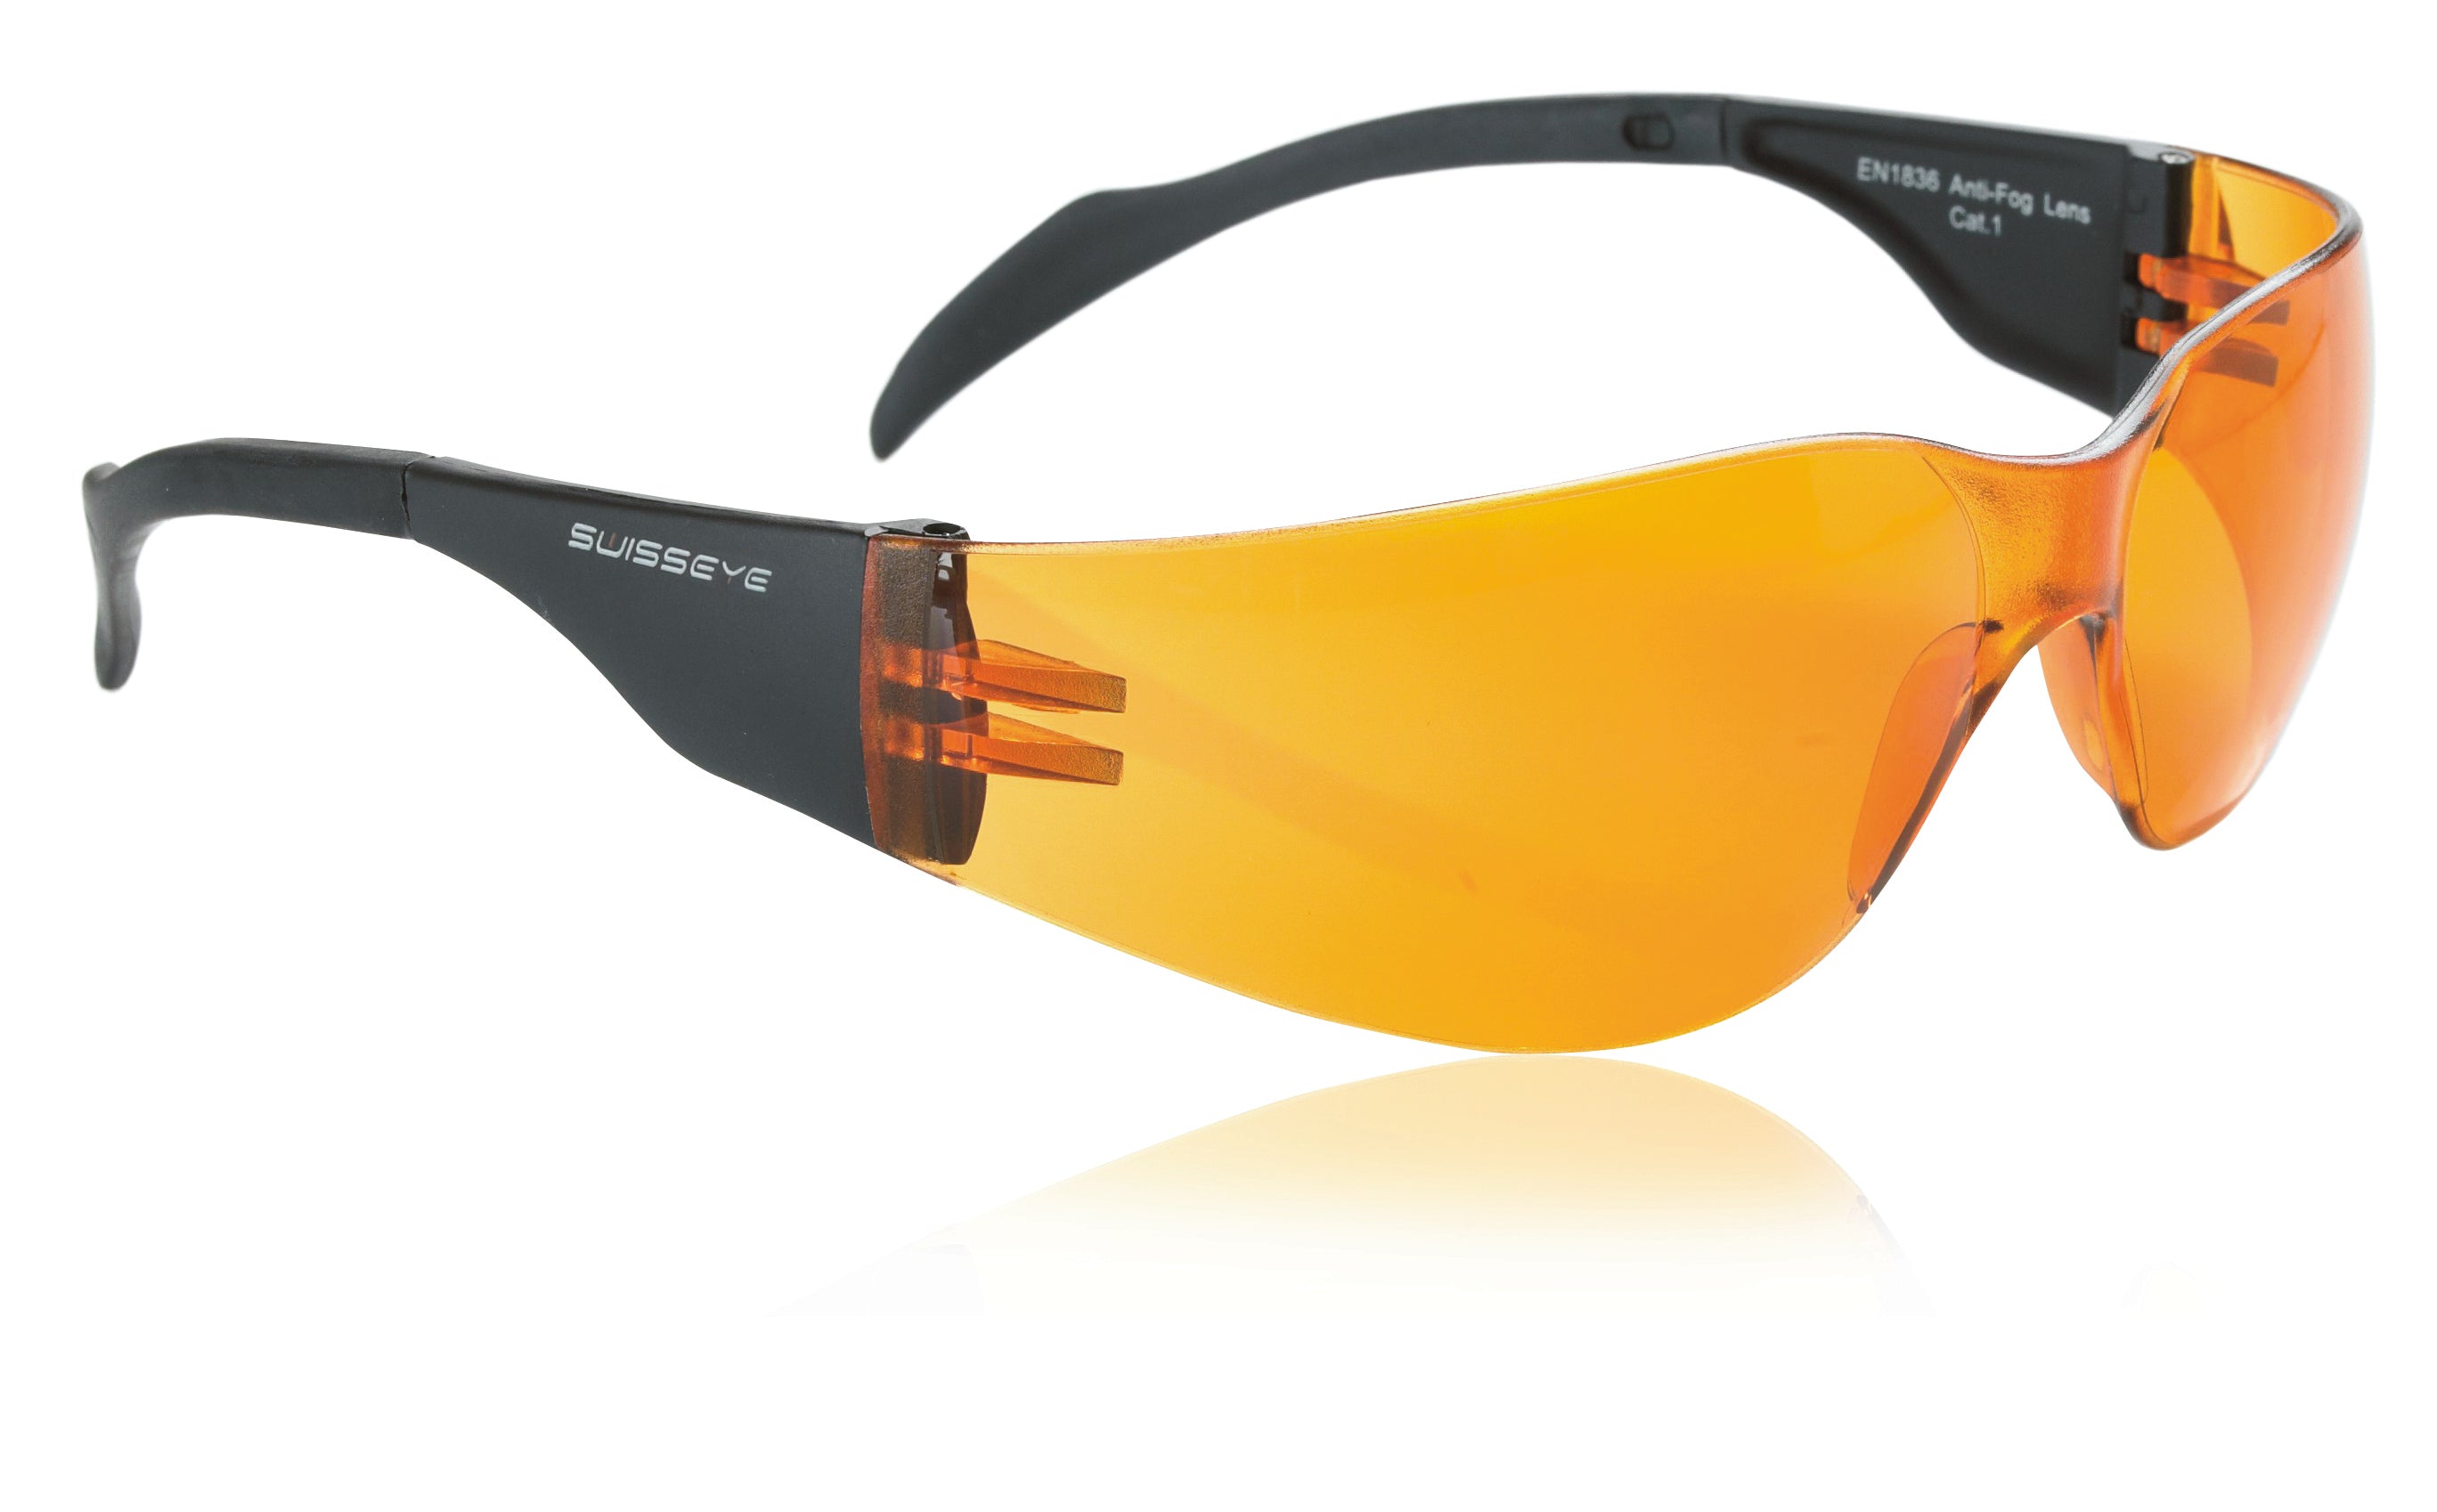 Swisseye Outbreak, schwarz, orange Gläser, Sportbrille, Radbrille